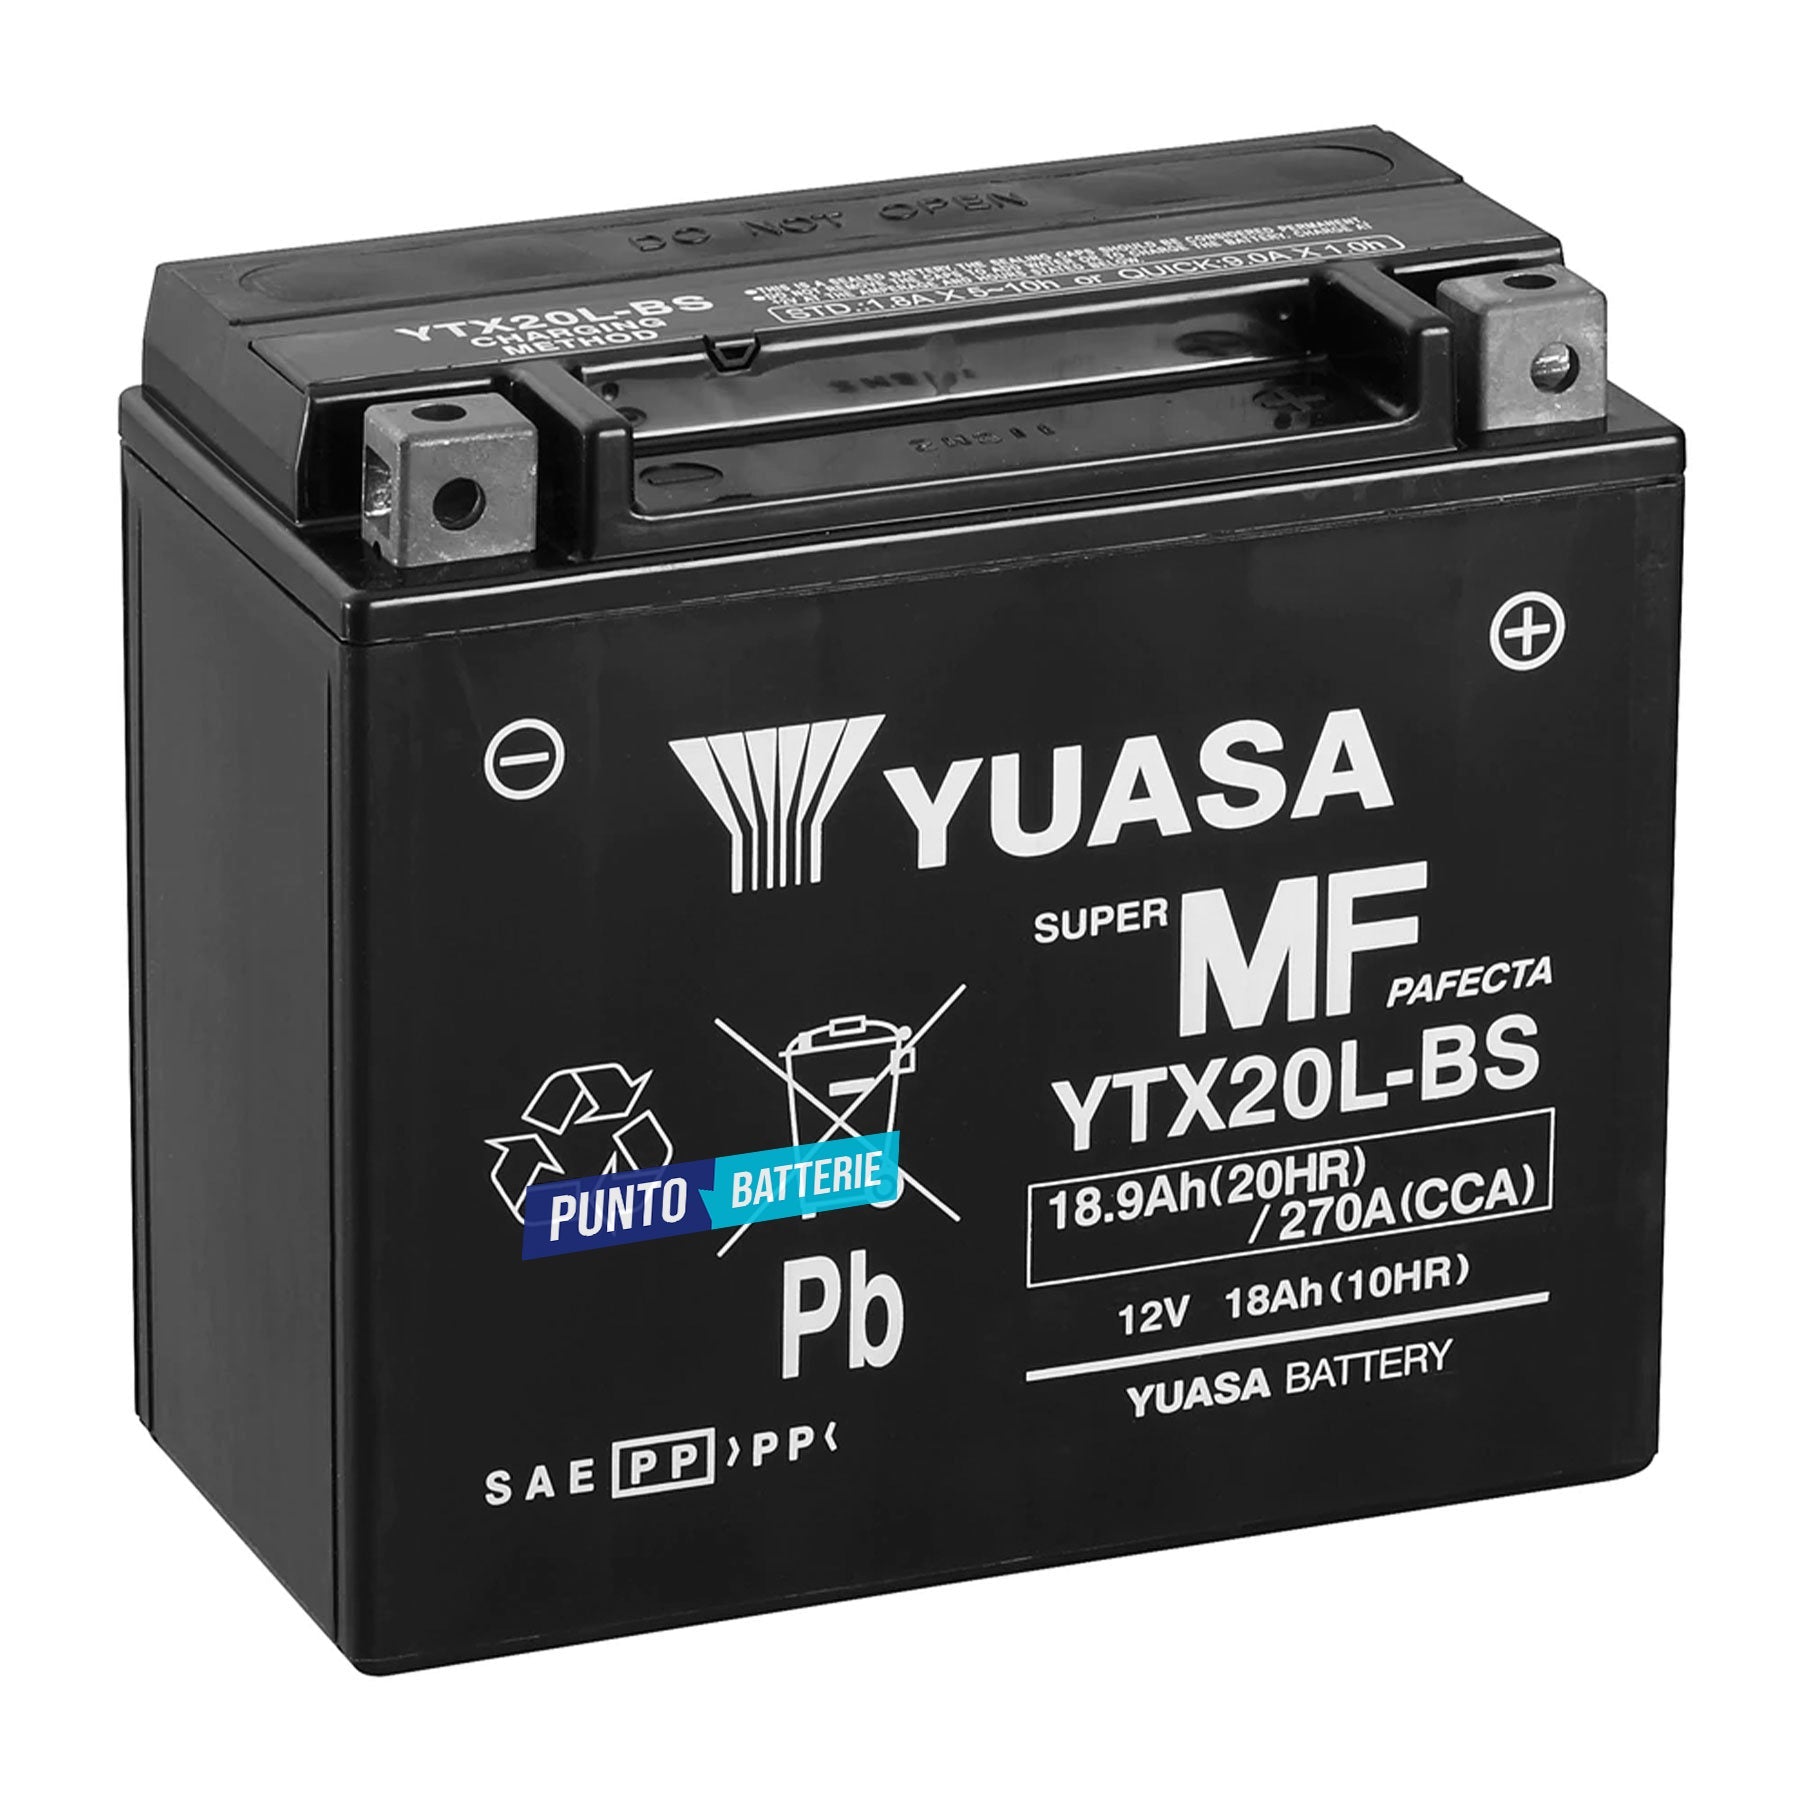 Batteria originale Yuasa YTX YTX20L-BS, dimensioni 175 x 87 x 155, polo positivo a destra, 12 volt, 18 amperora, 270 ampere. Batteria per moto, scooter e powersport.